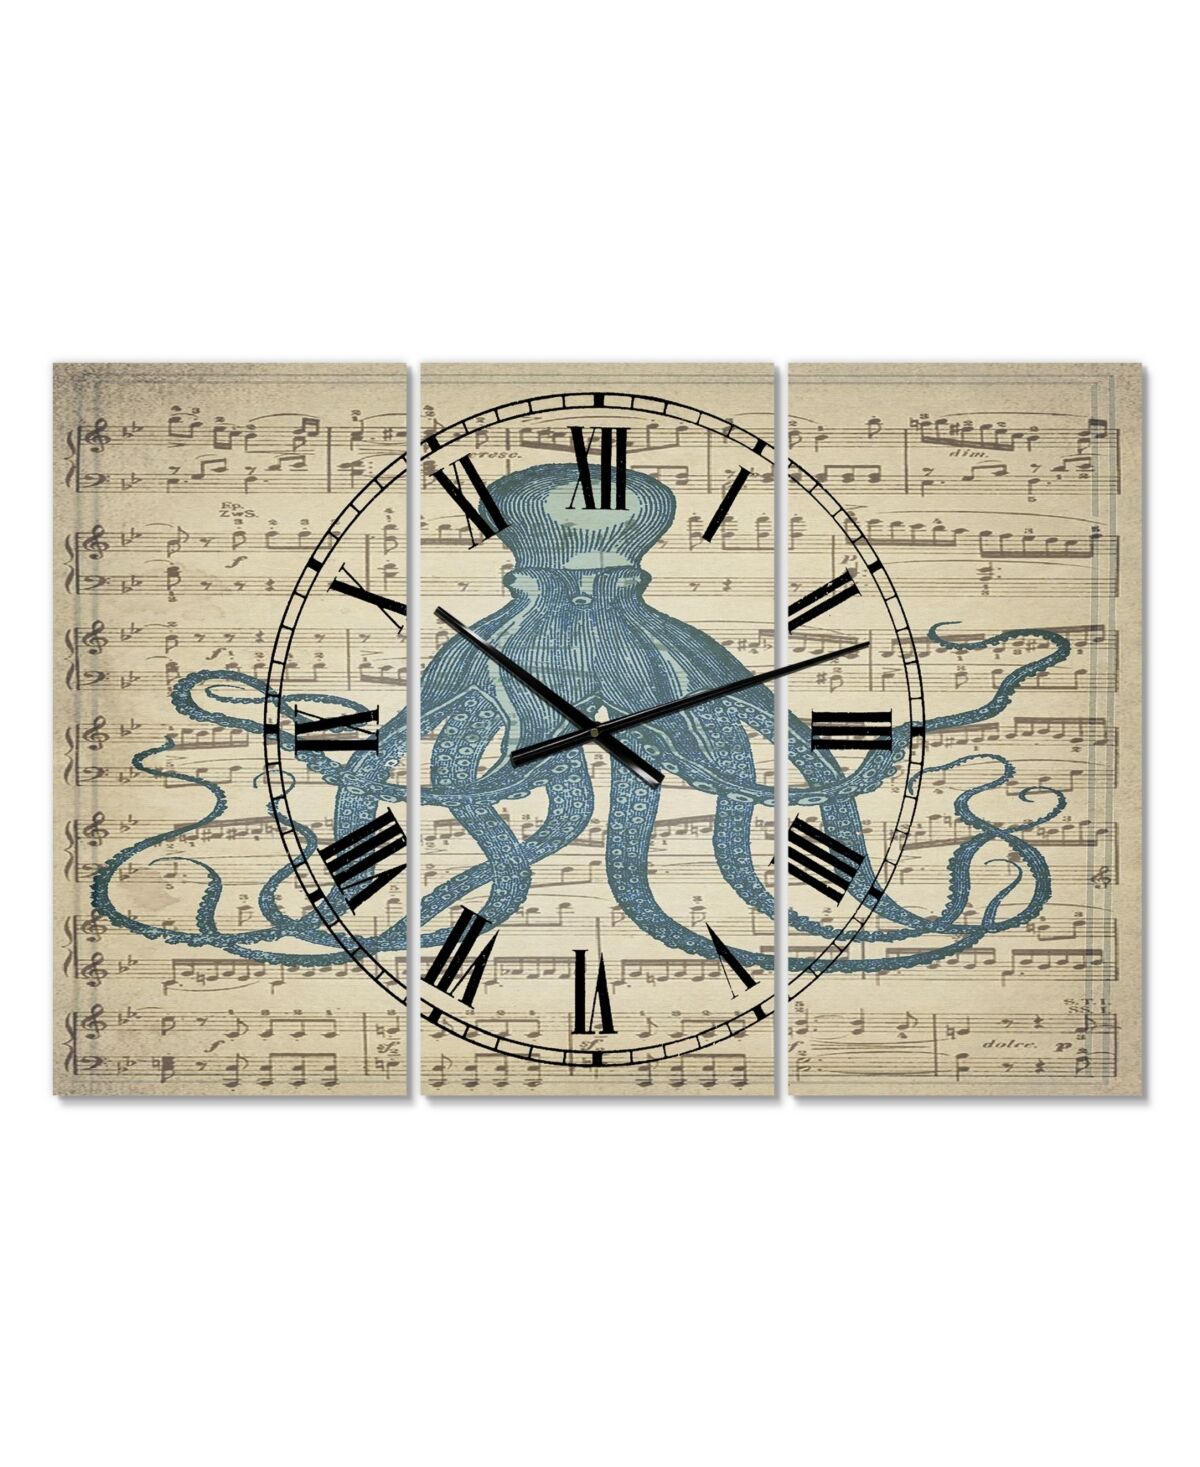 Designart Octopus Music Score Ii Large Nautical & Coastal 3 Panels Wall Clock - 23